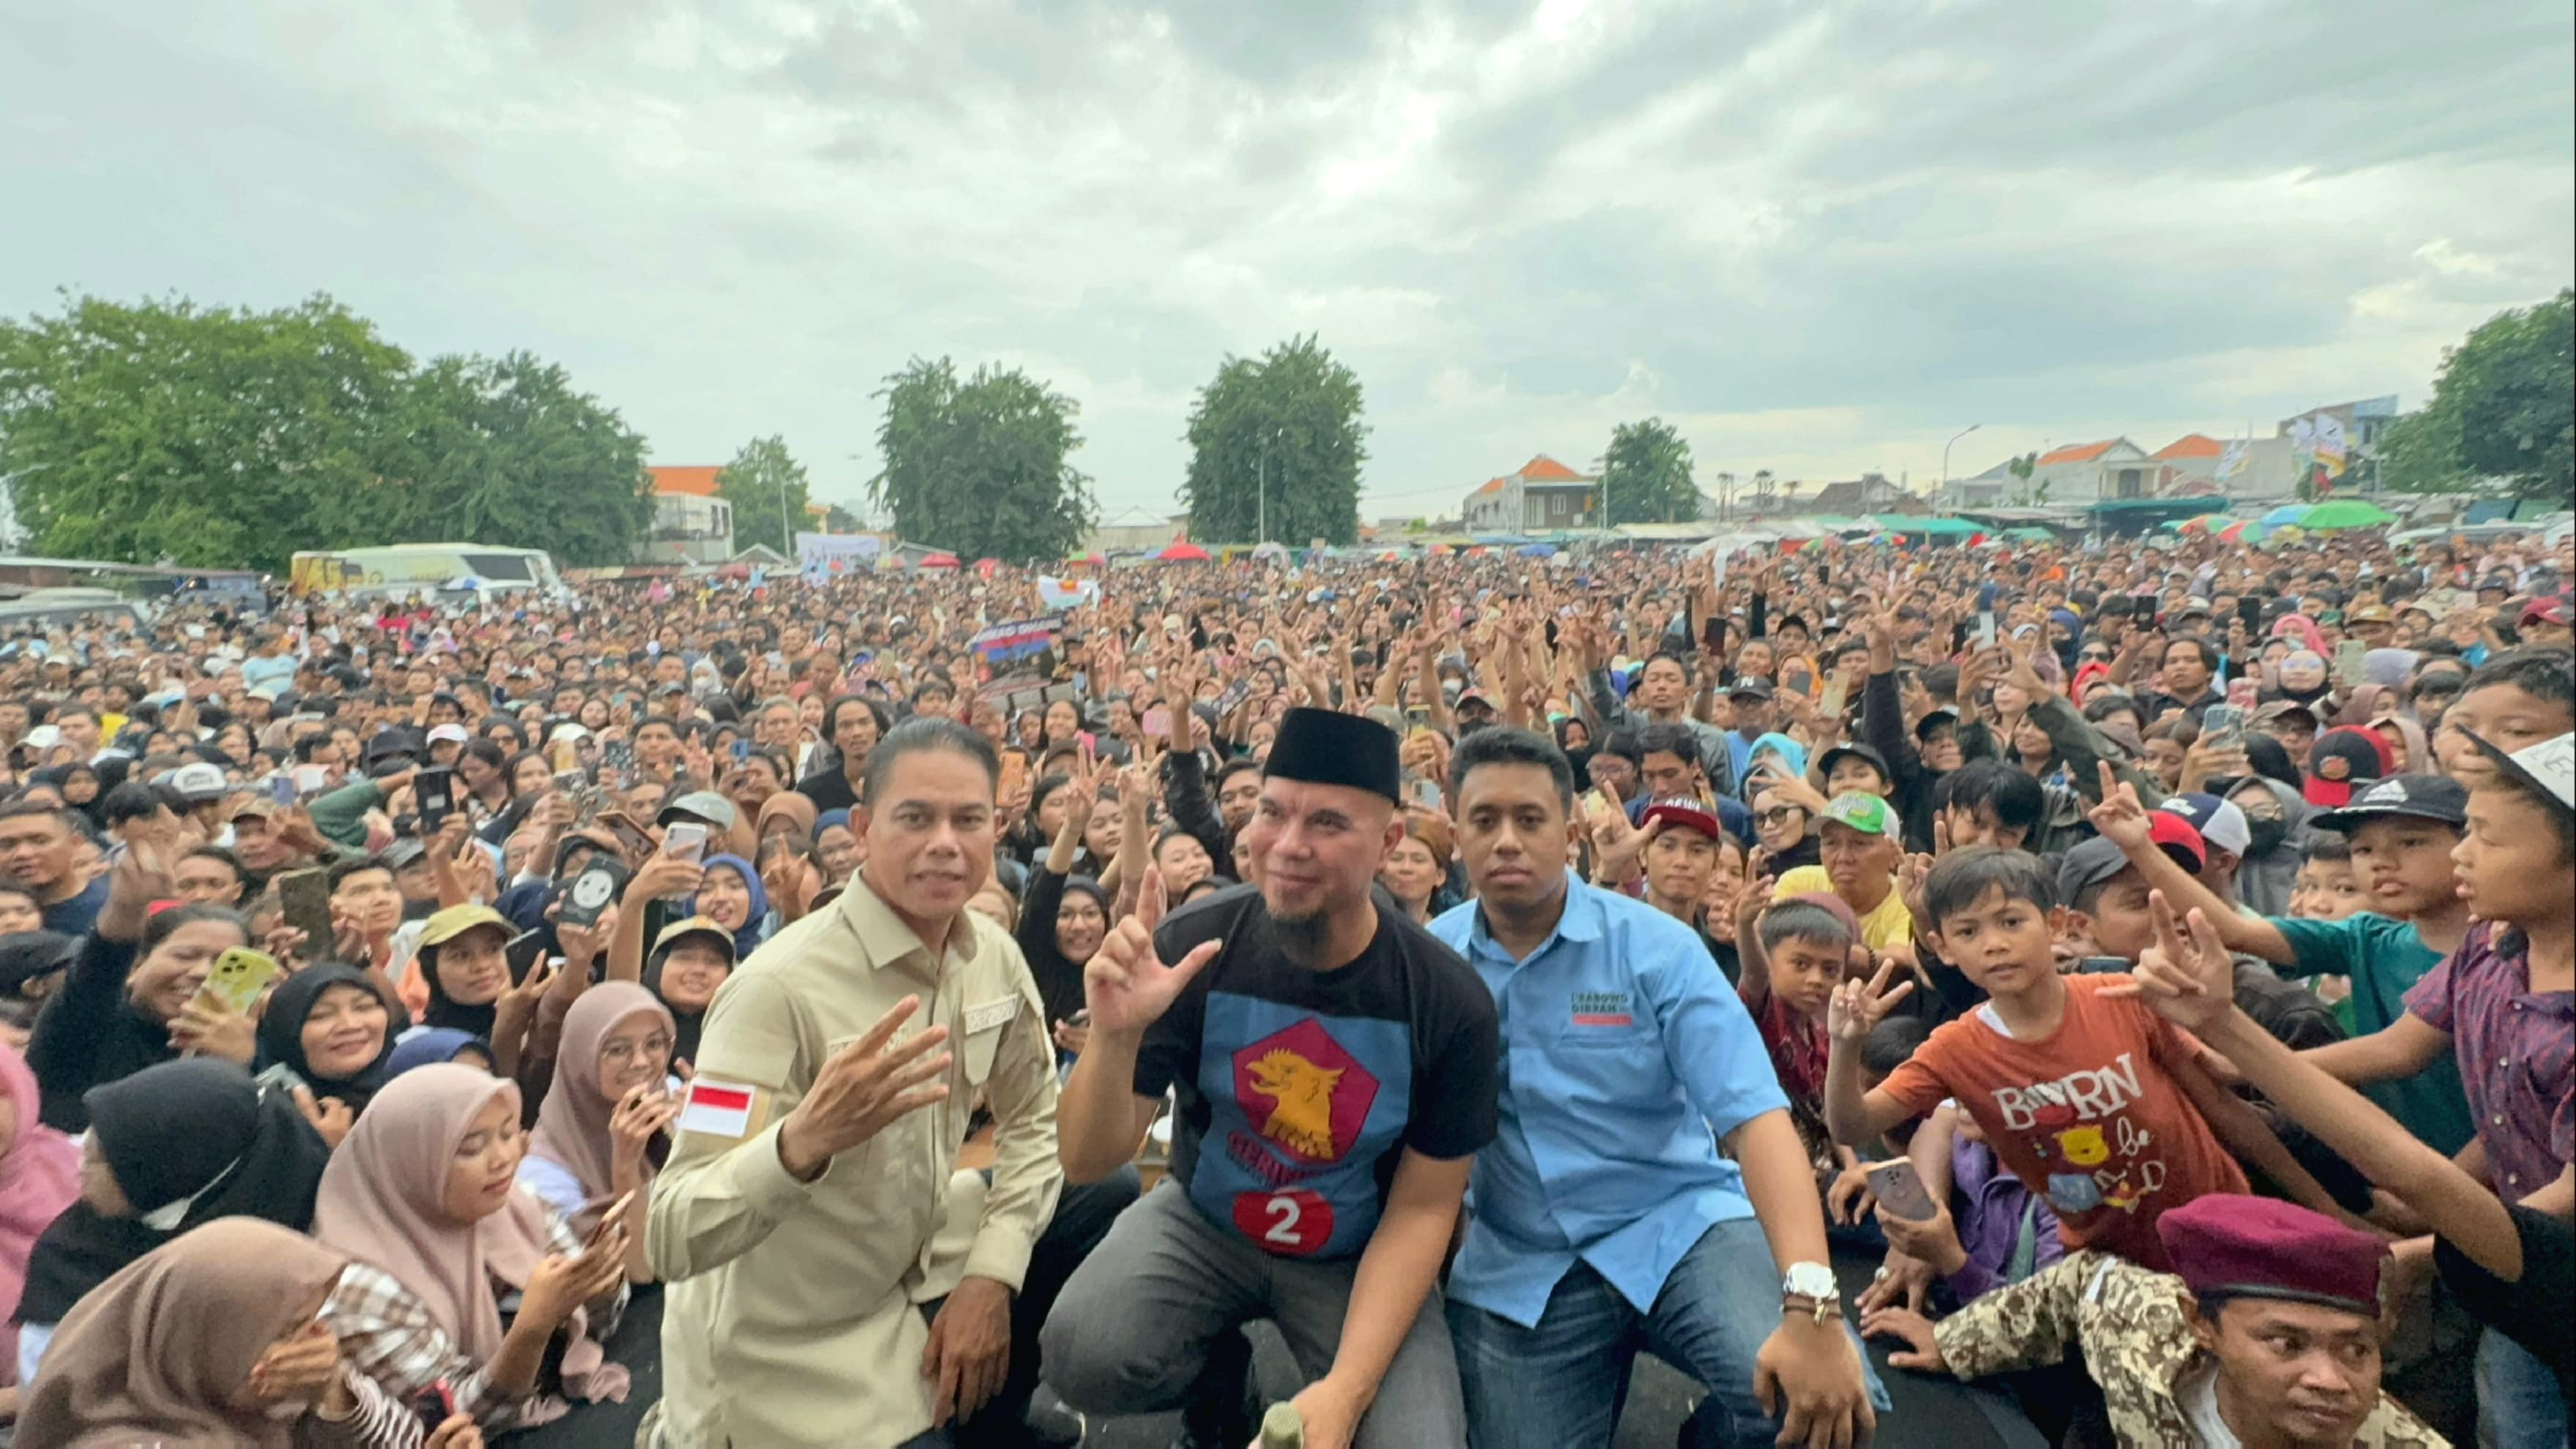 Kolaborasi Caleg DPRD Surabaya Bagas Iman Waluyo dan Ahmad Dhani di Konser Indonesia Maju 